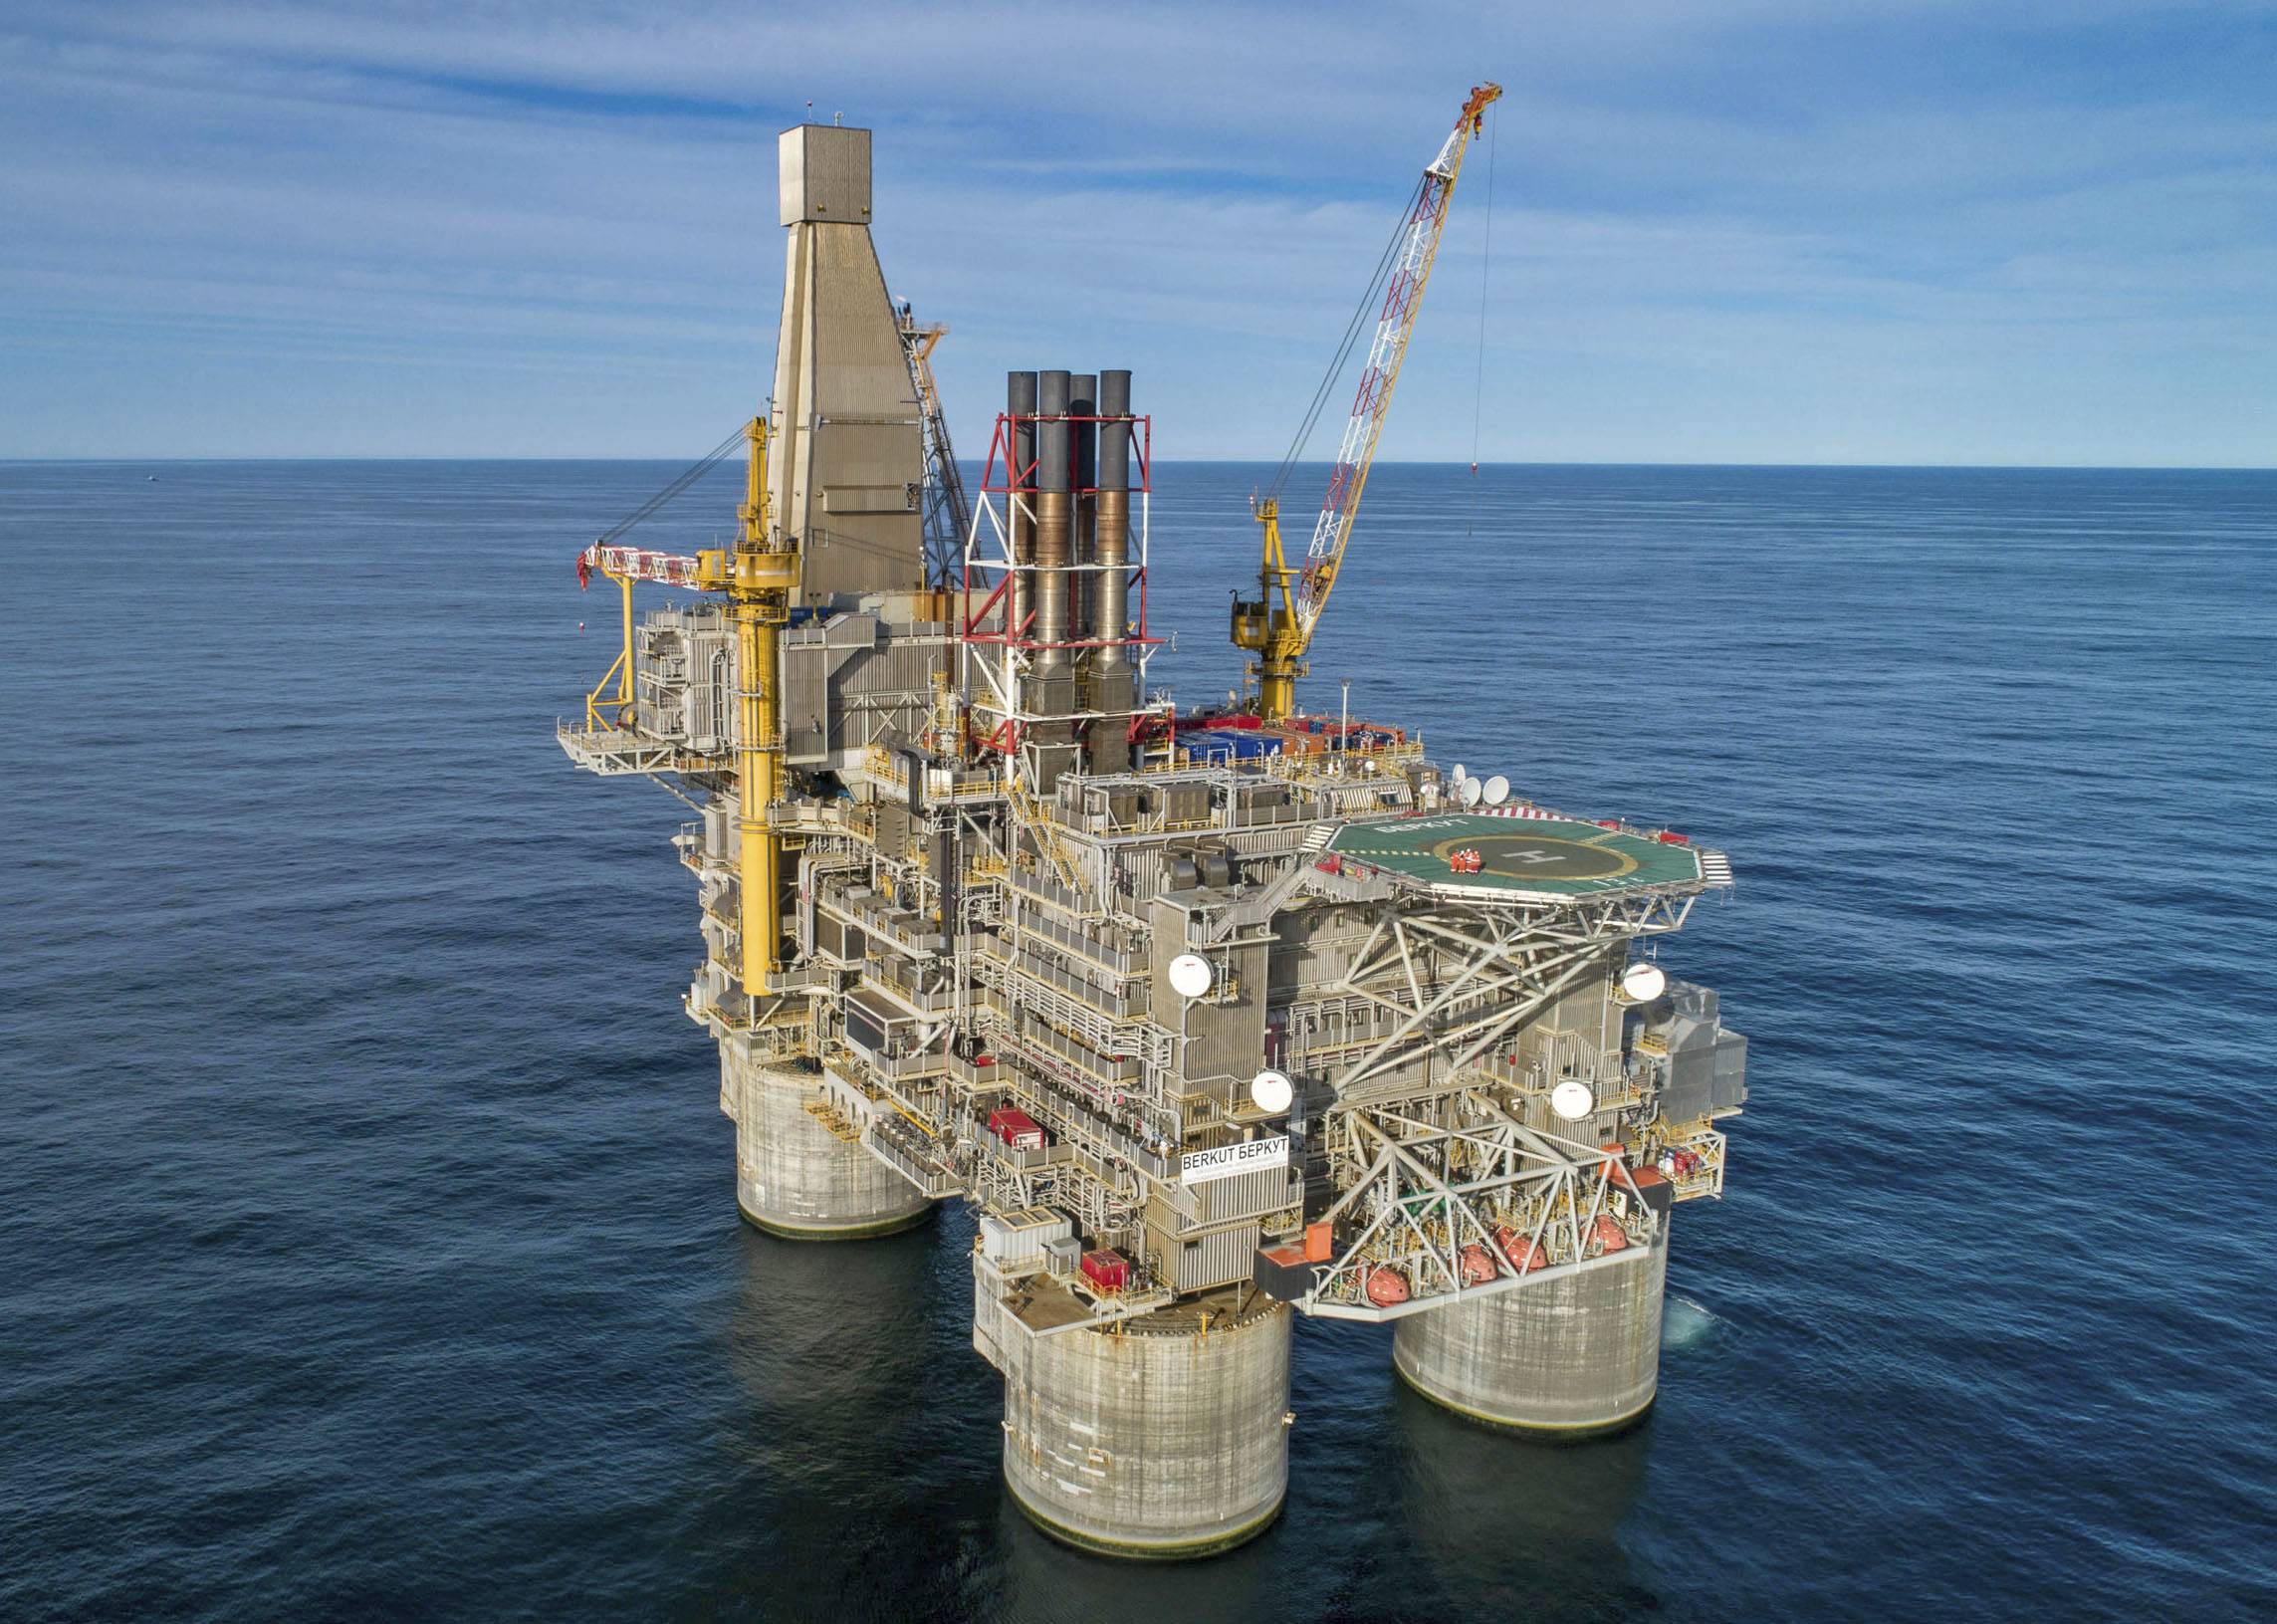 Sakhalin 1 oil and gas development offshore facility in Russia | EXXON NEFTEGAS LTD. / VIA KYODO